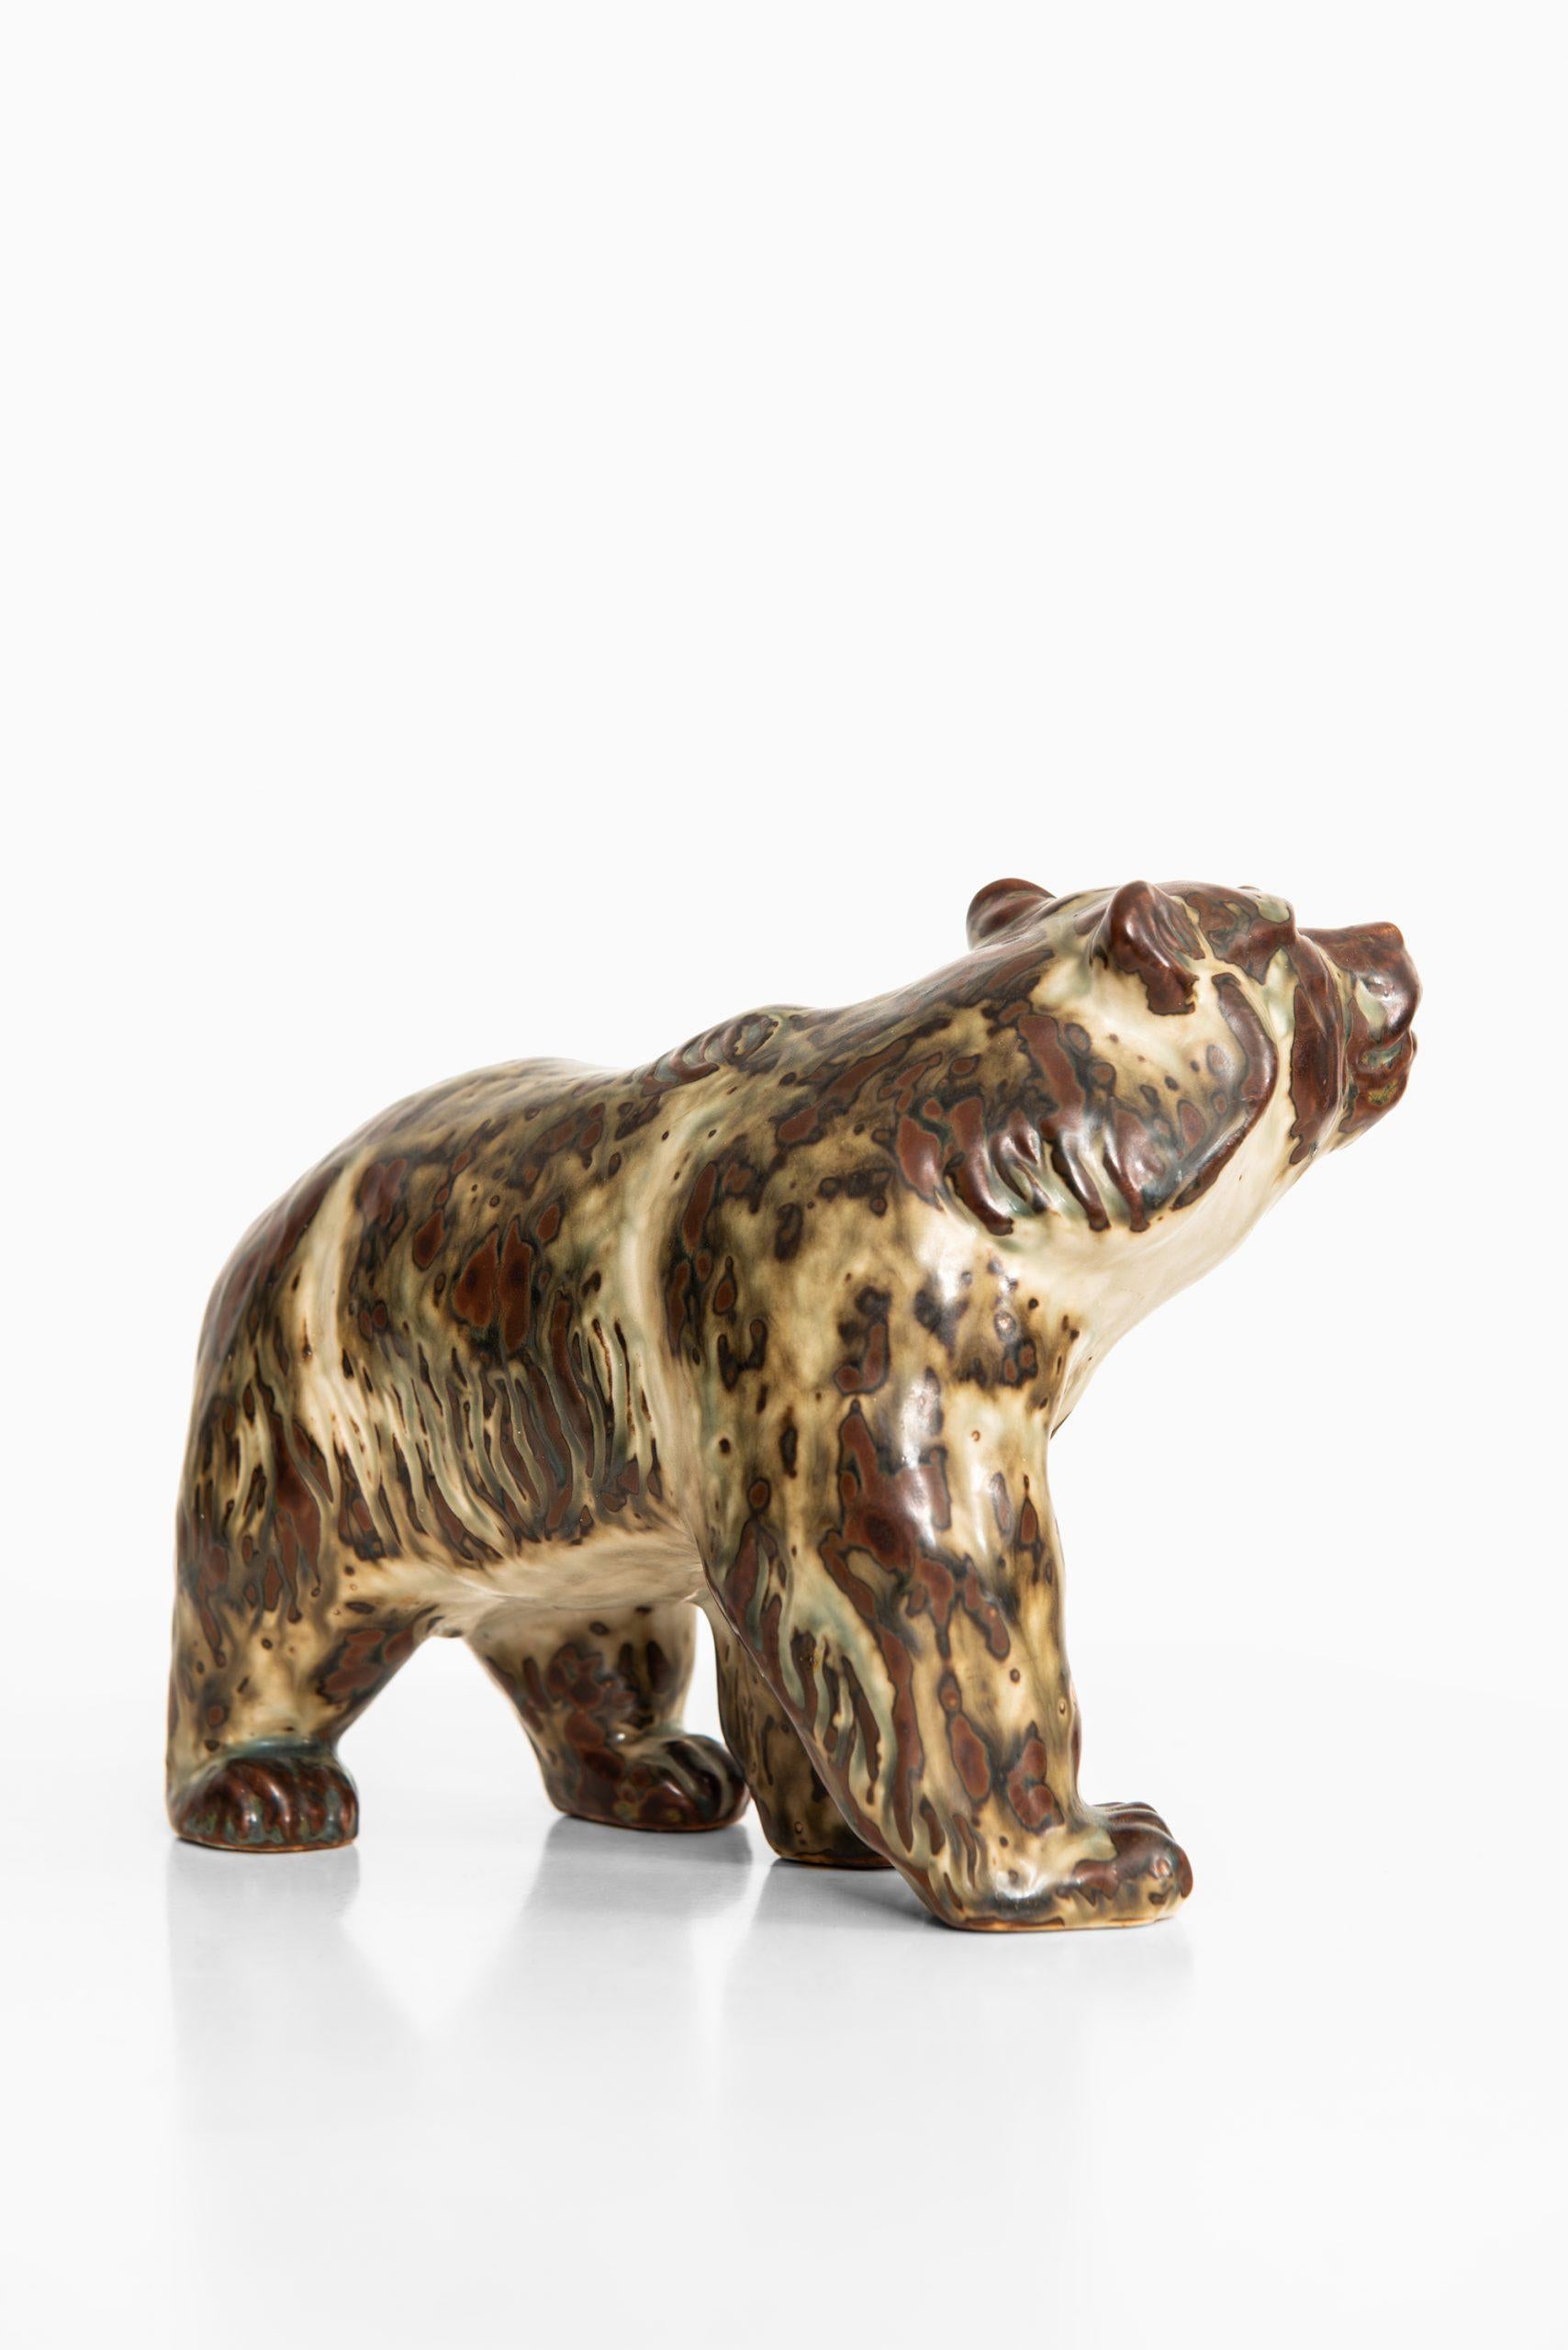 Danish Knud Kyhn Ceramic Bear Nr 20155 Produced by Royal Copenhagen in Denmark For Sale